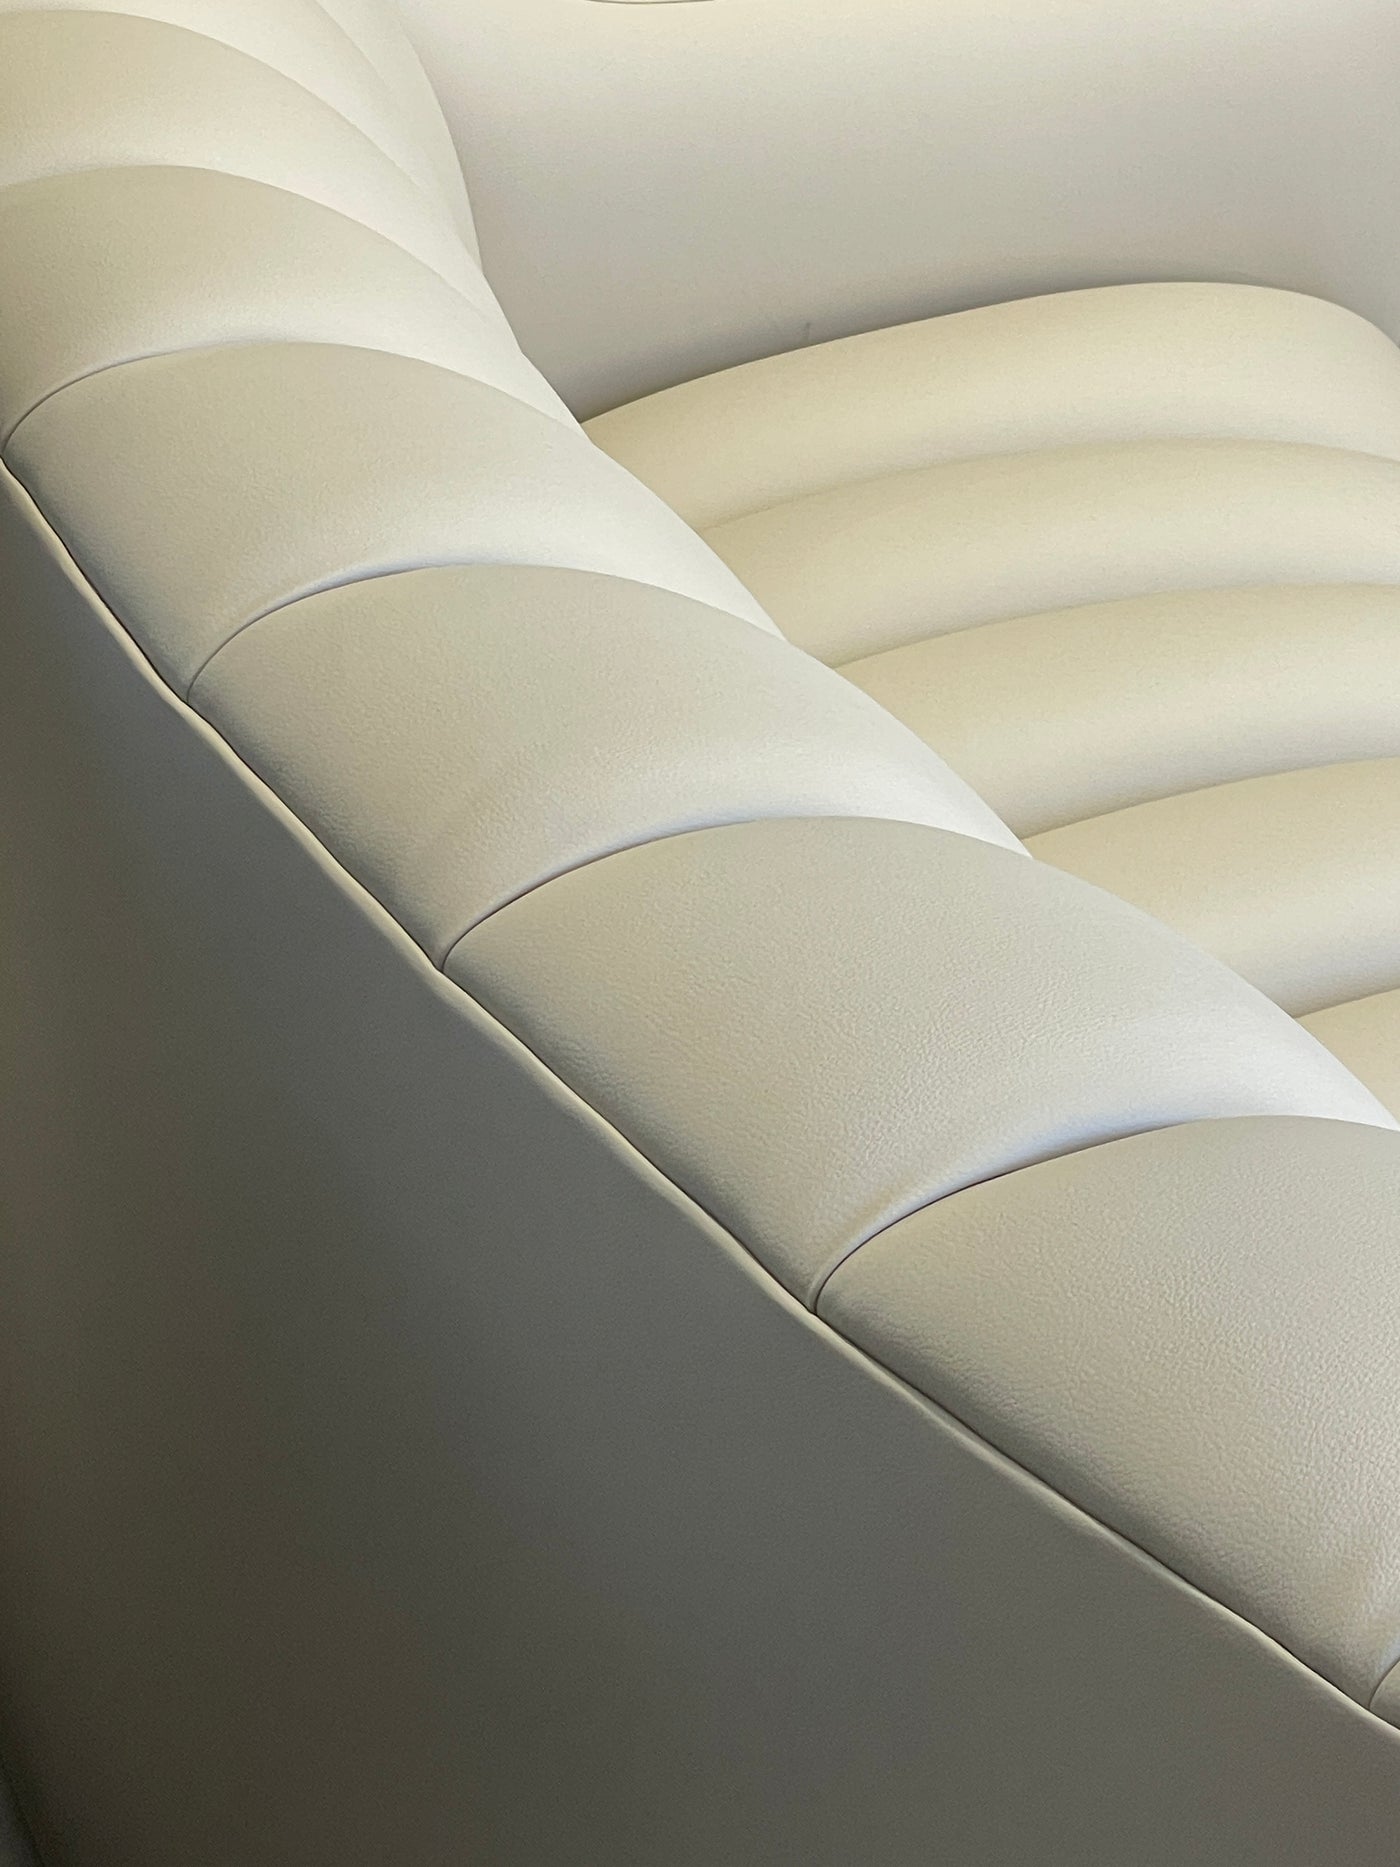 Ramazzotti Sofa Vegan Leather - Future Classics Furniture